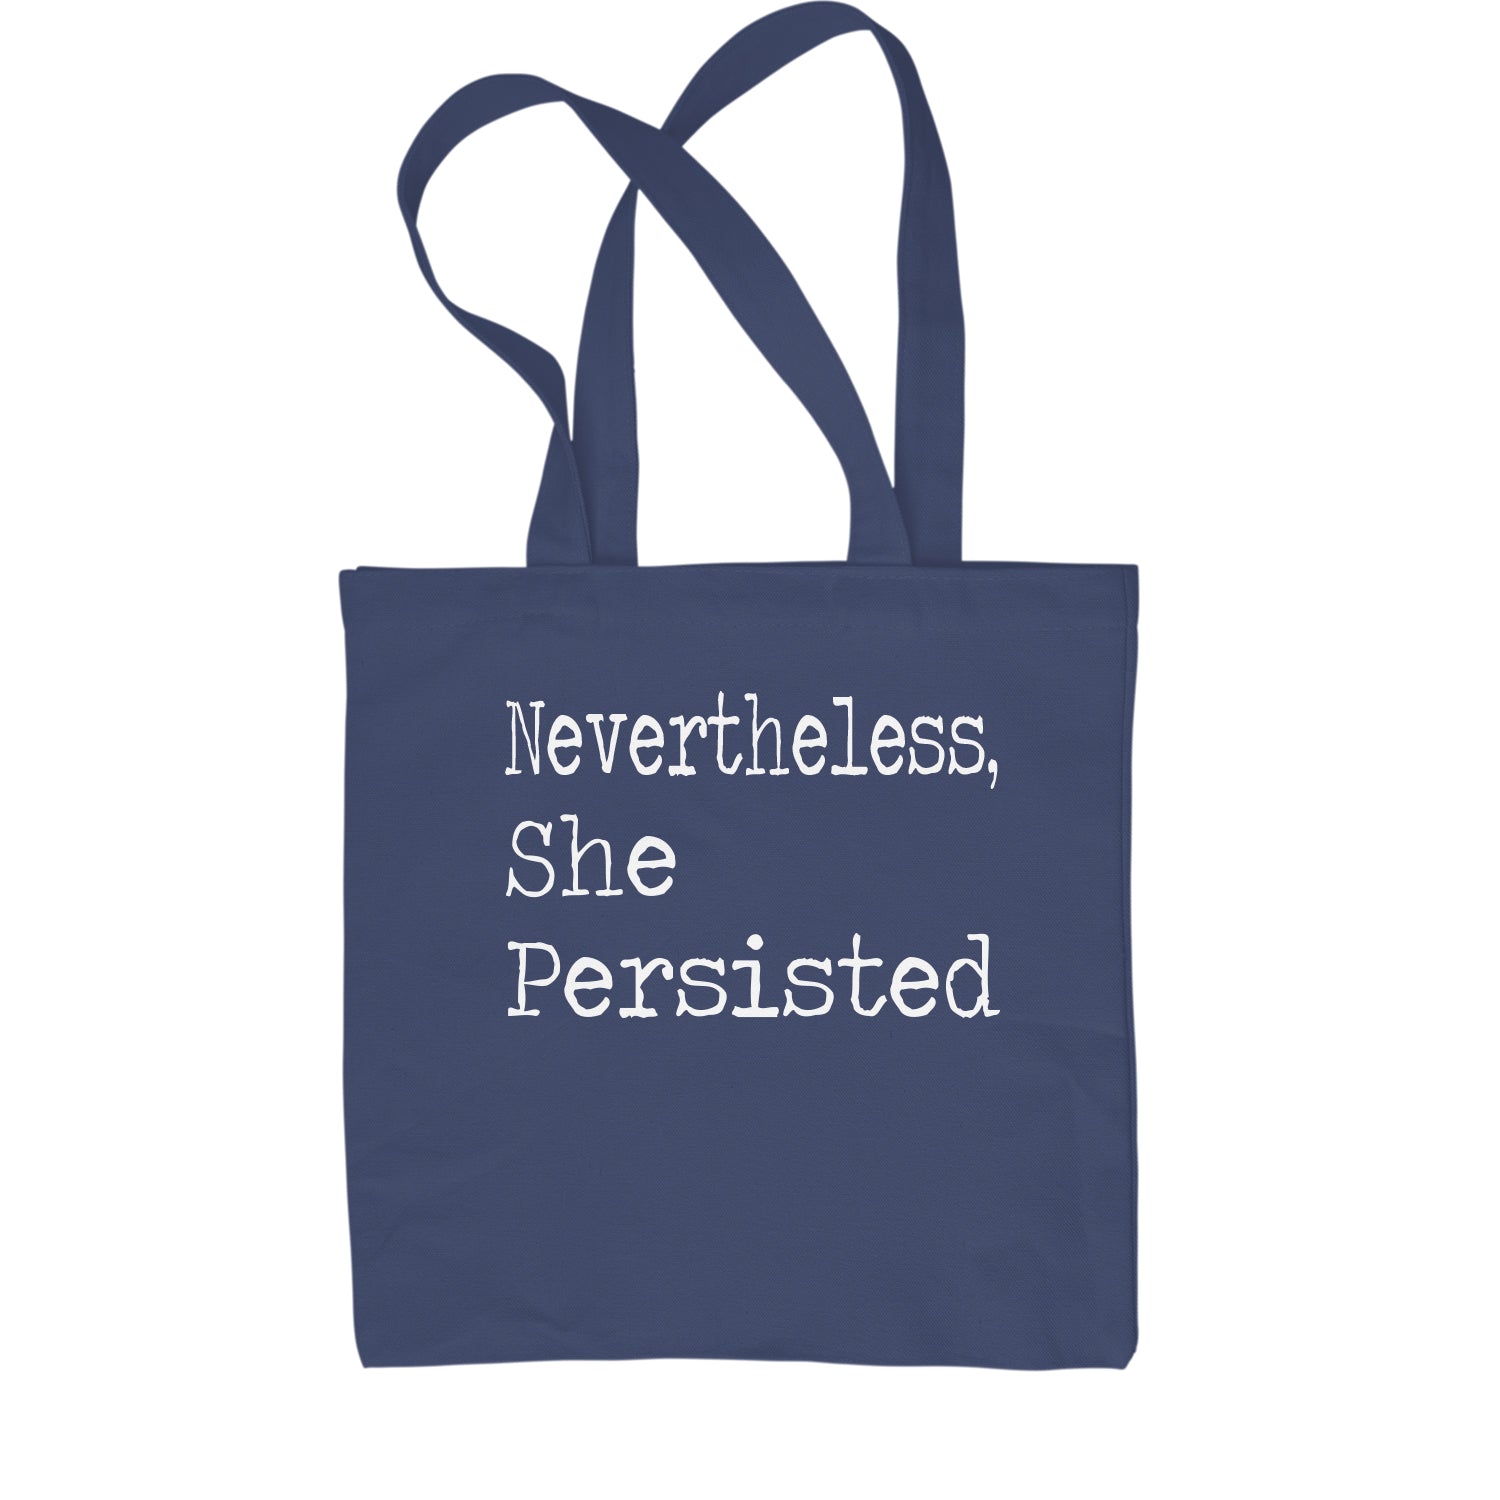 Nevertheless, She Persisted Shopping Tote Bag 2020, feminism, feminist, kamala, letlizspeak, mamala, mcconnell, mitch, momala, mommala by Expression Tees